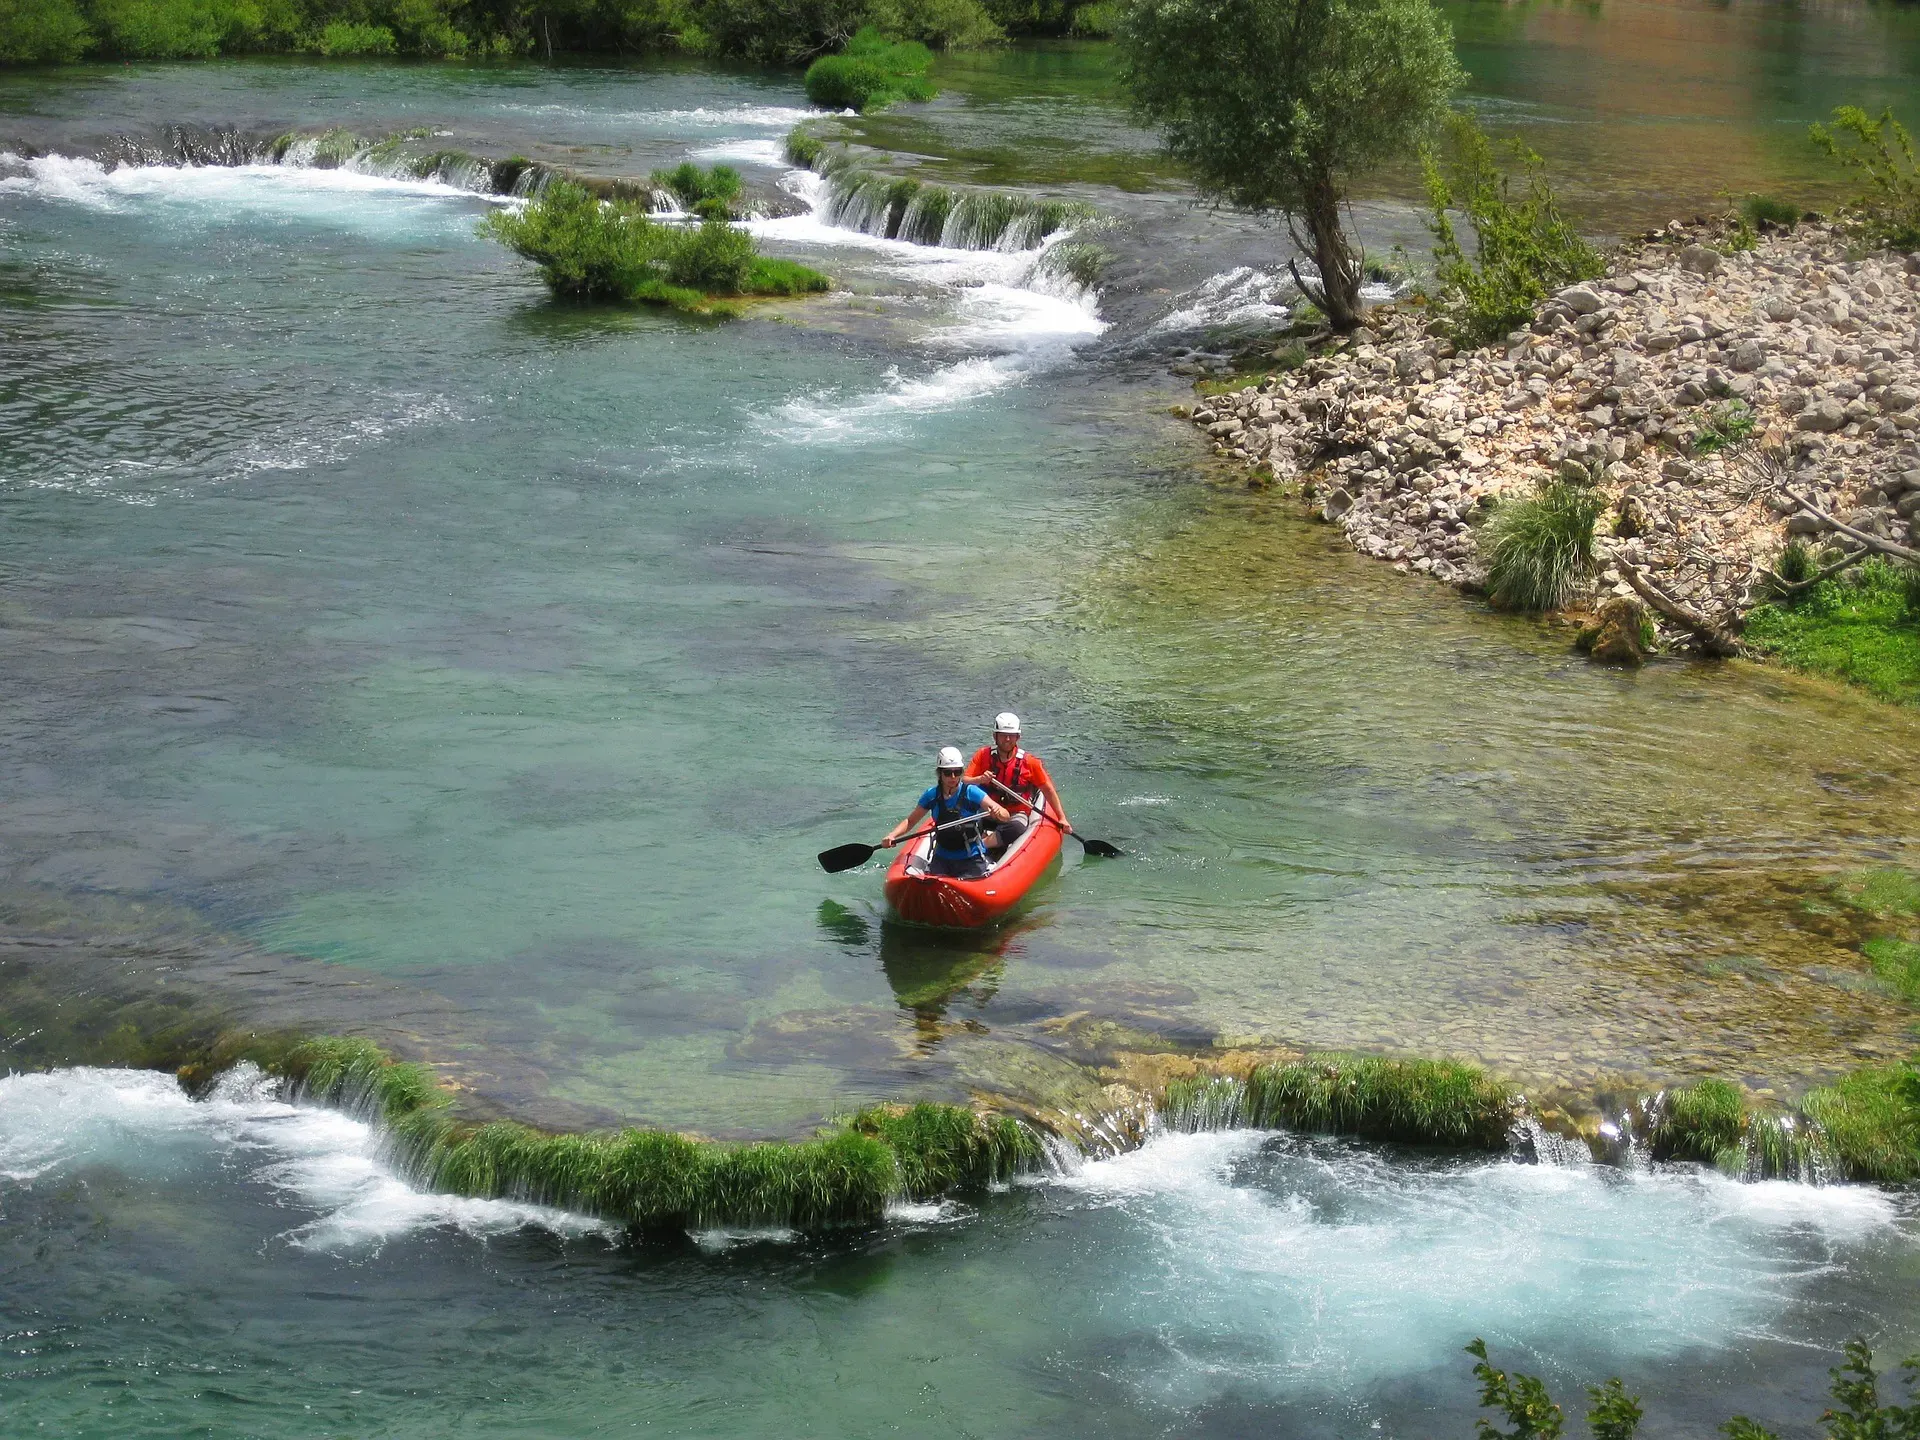 Kayakers on the Zrmanja River